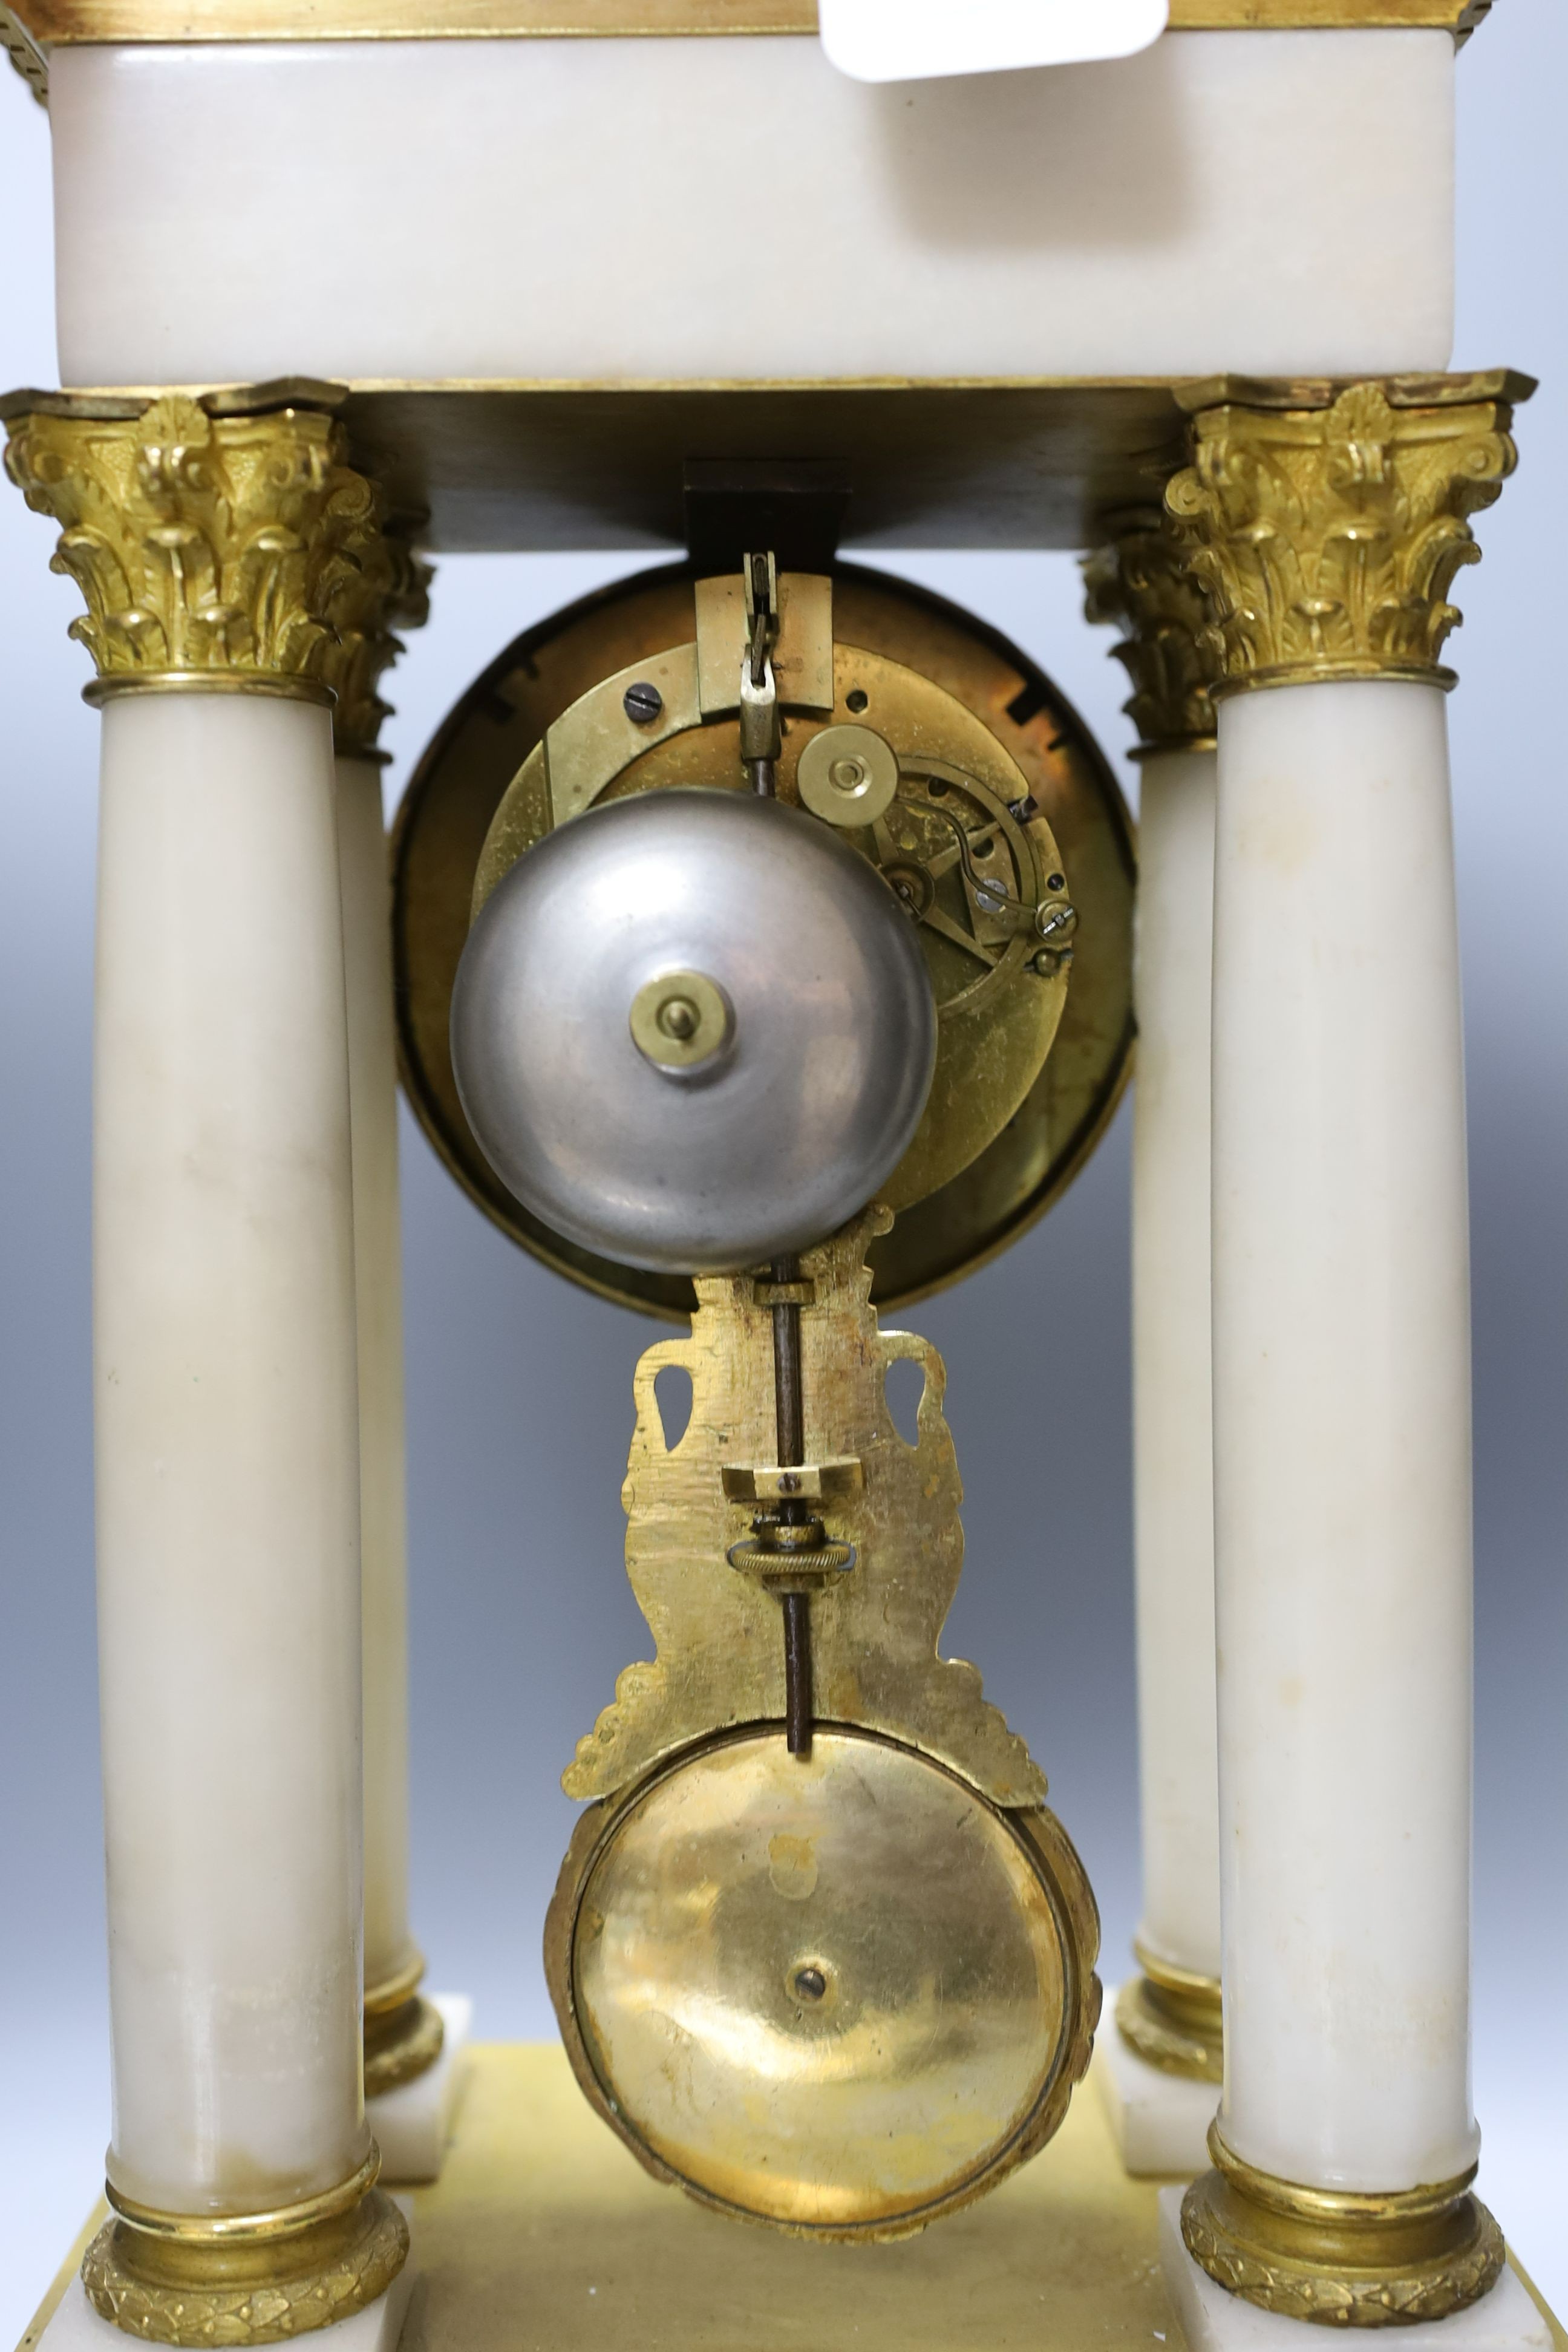 A 19th-century French ormolu and alabaster portico clock 53cm